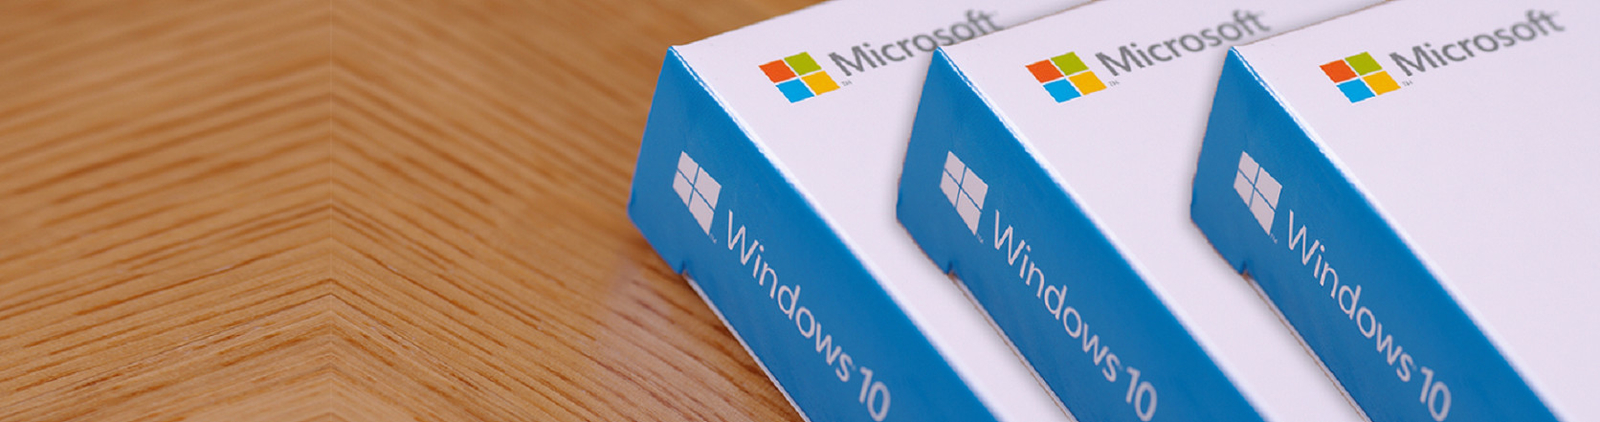 Microsoft Windows 10 Berufs